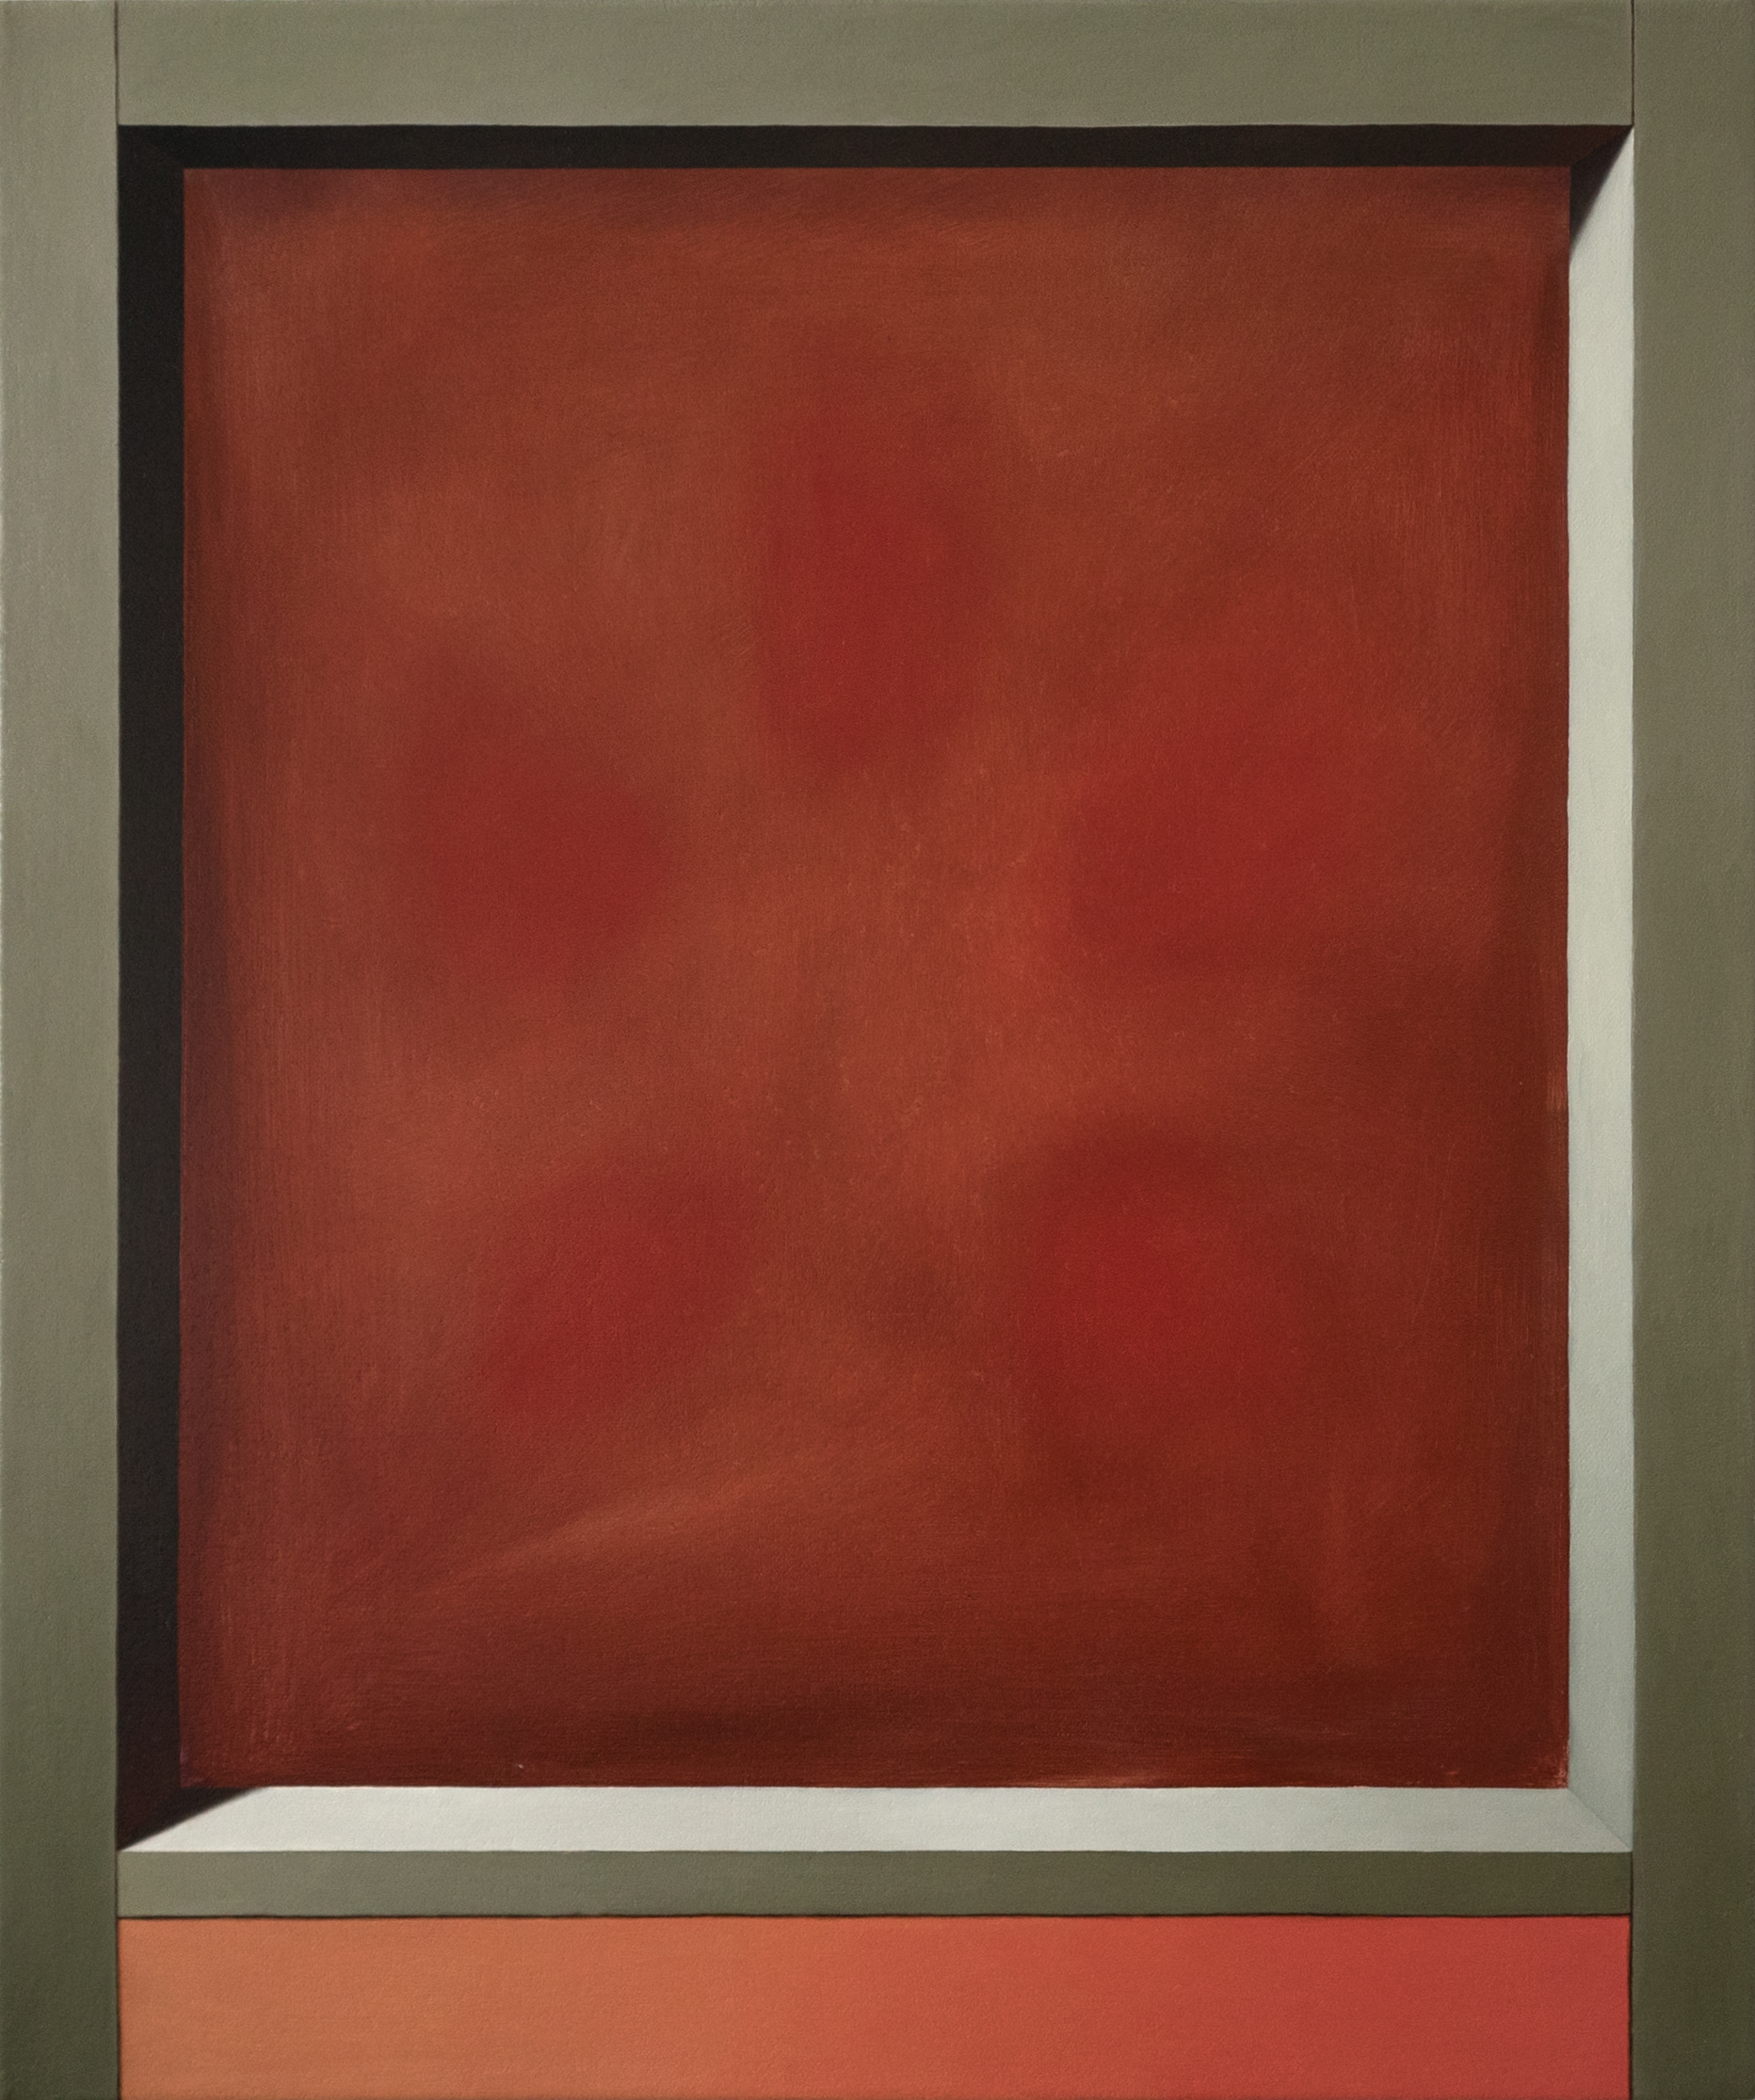   Exposed Interior (Passiflora)   2017  Oil on canvas  19 x 16 in 